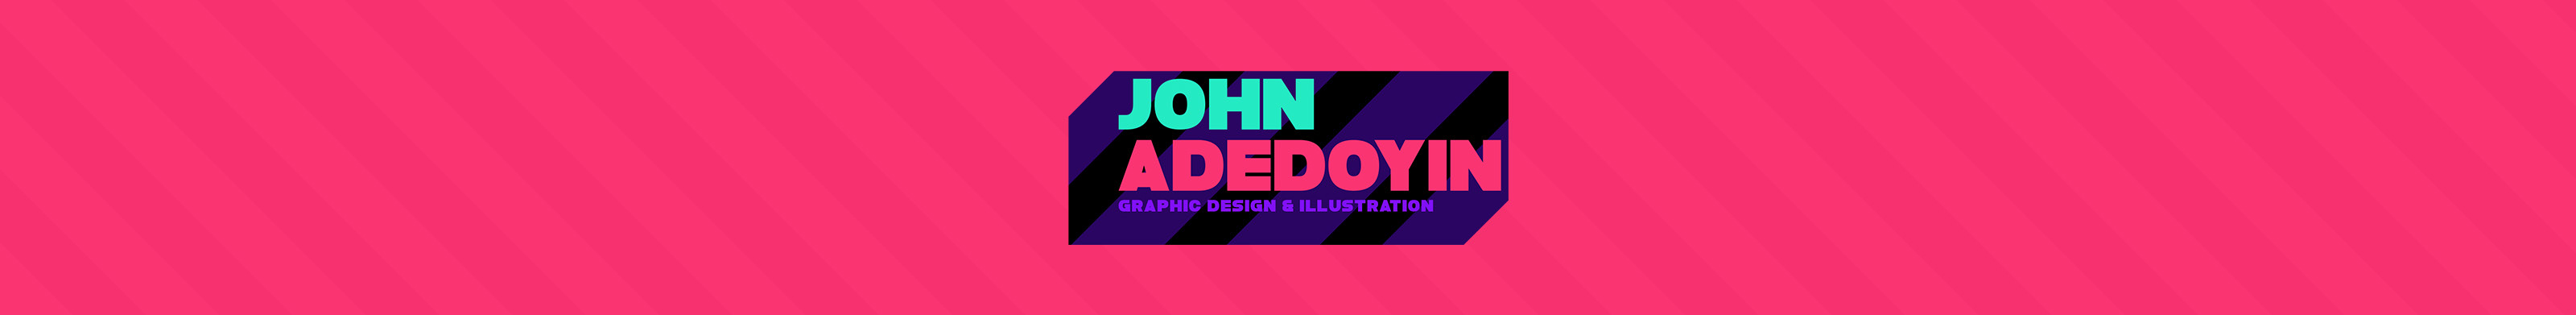 Banner del profilo di John Adedoyin